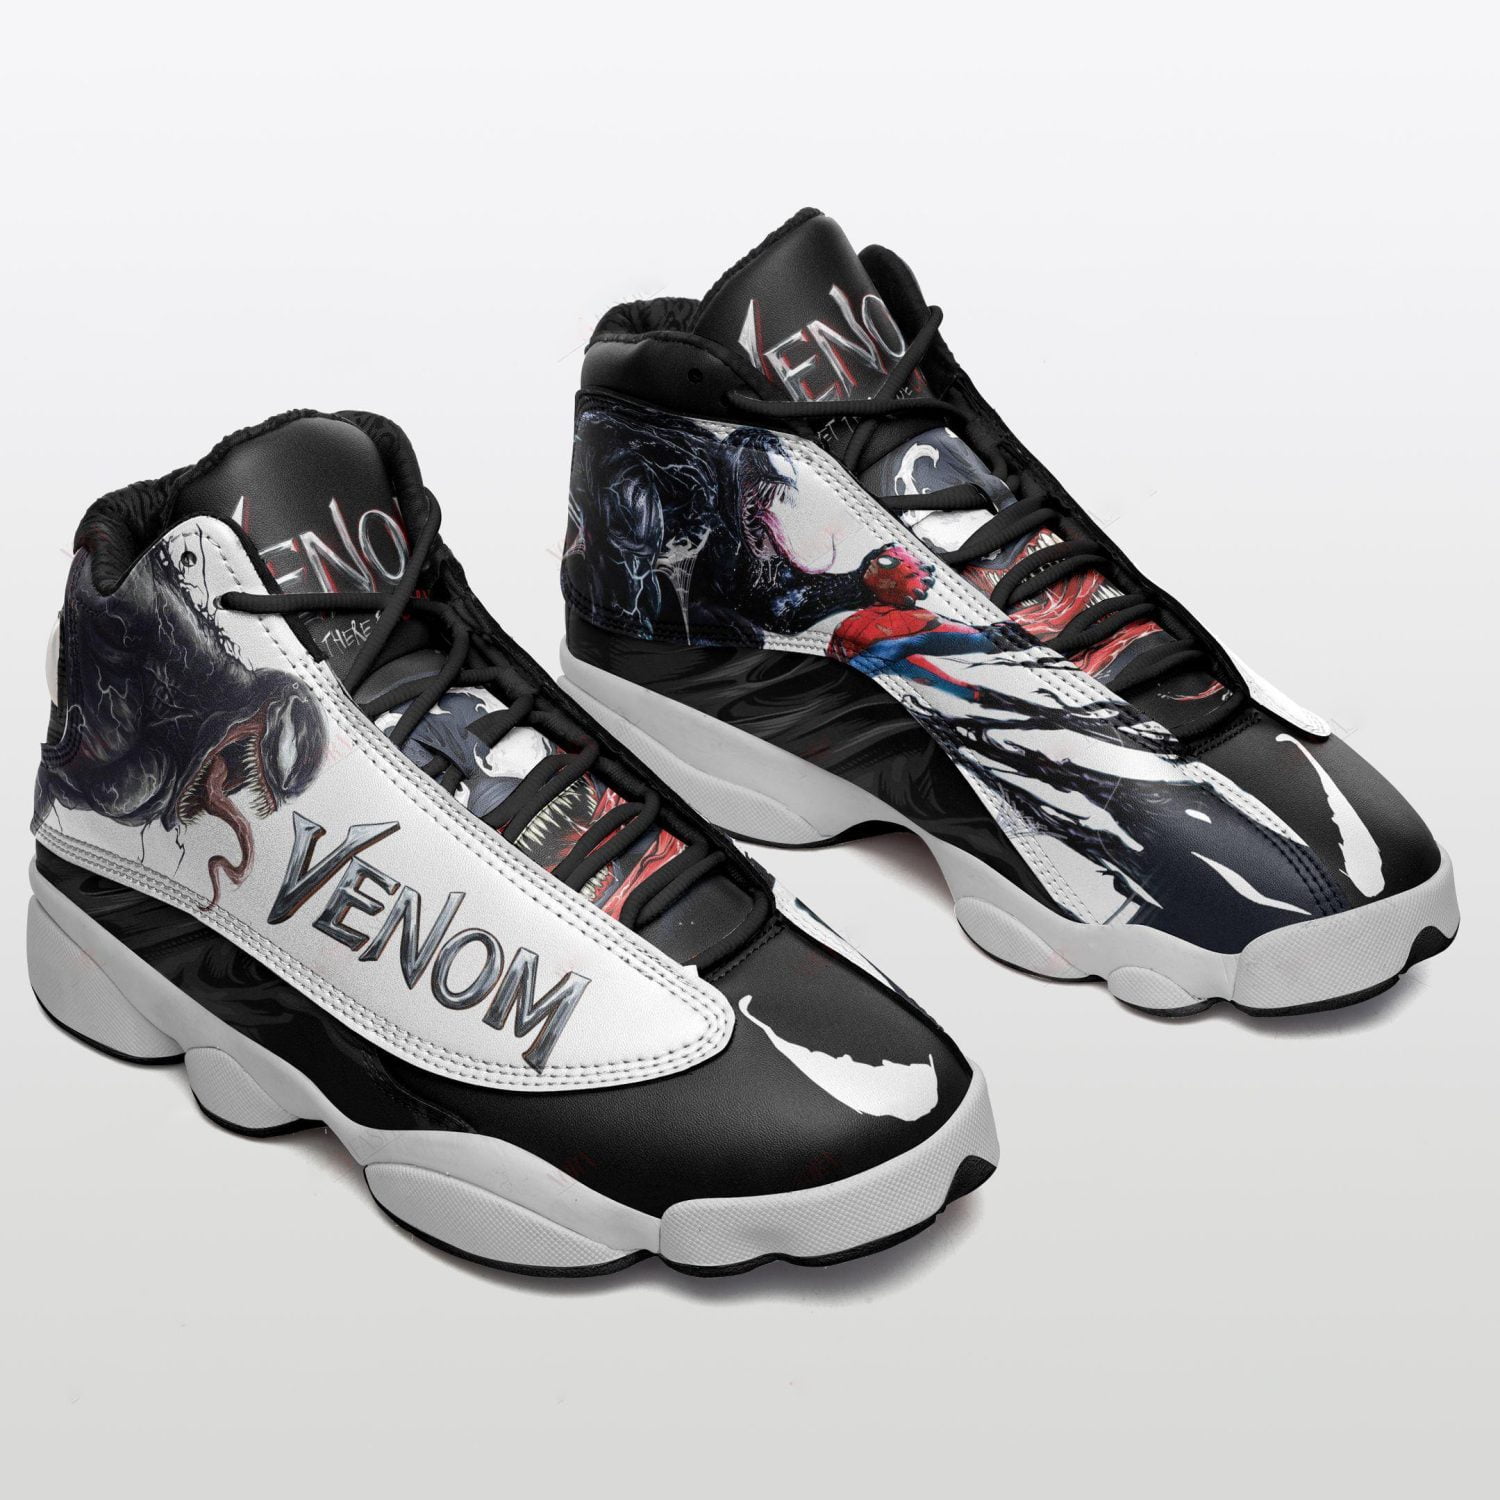 Venom Movie Lover Air Jordan 13 Shoes For Men And Women Style: Men's Air Jordan 13, Color: Black